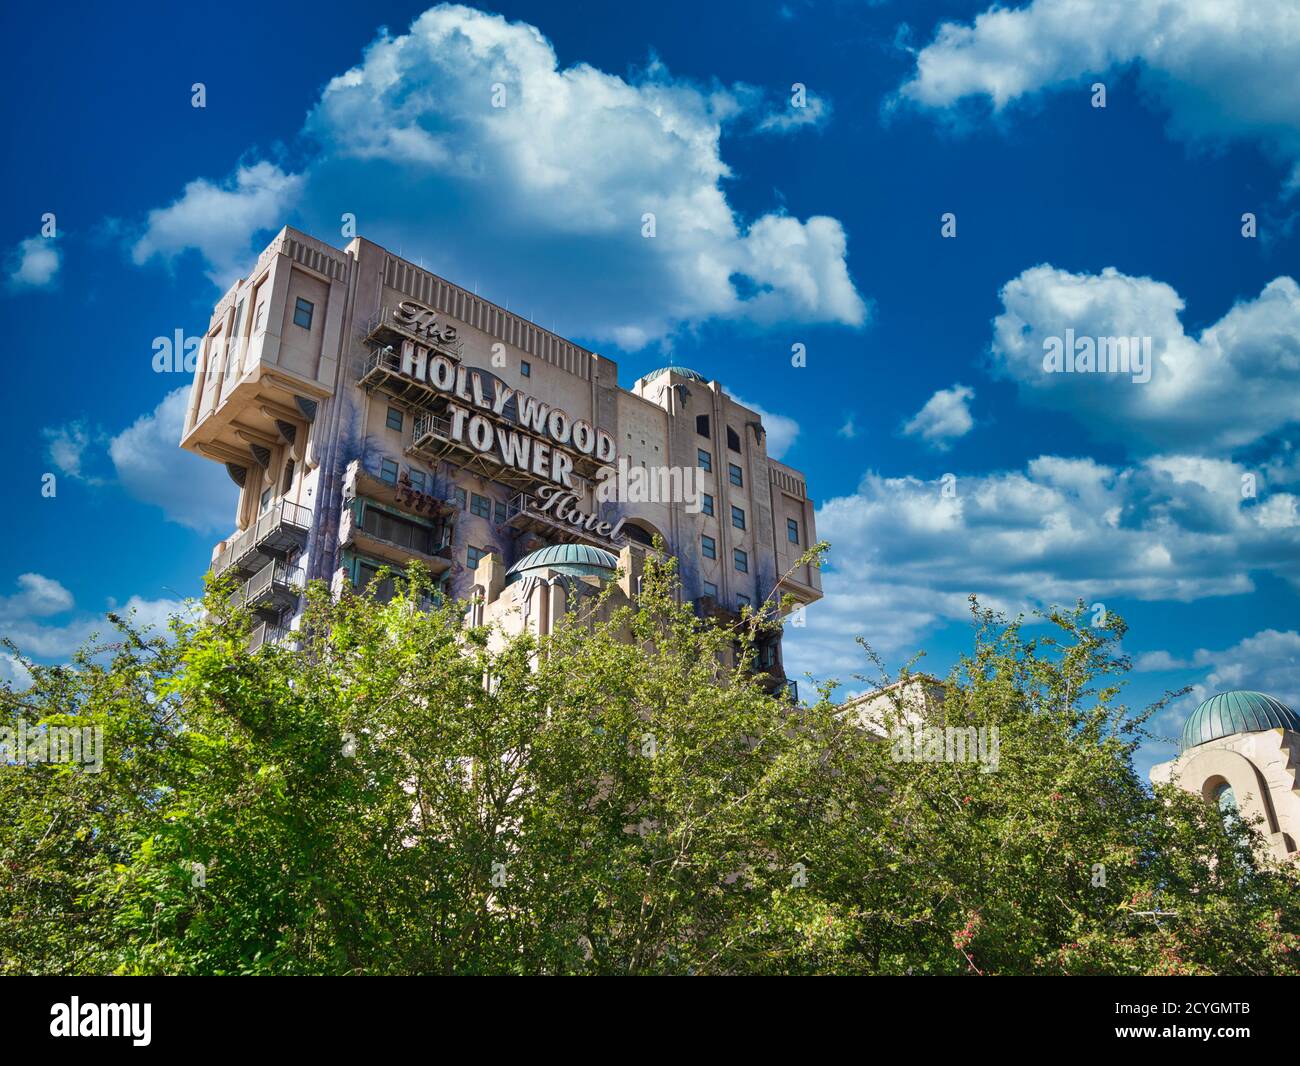 Hollywood Tower Hotel, Disneyland Paris, Marne-la-Vallée, Paris, France, Europe Stock Photo